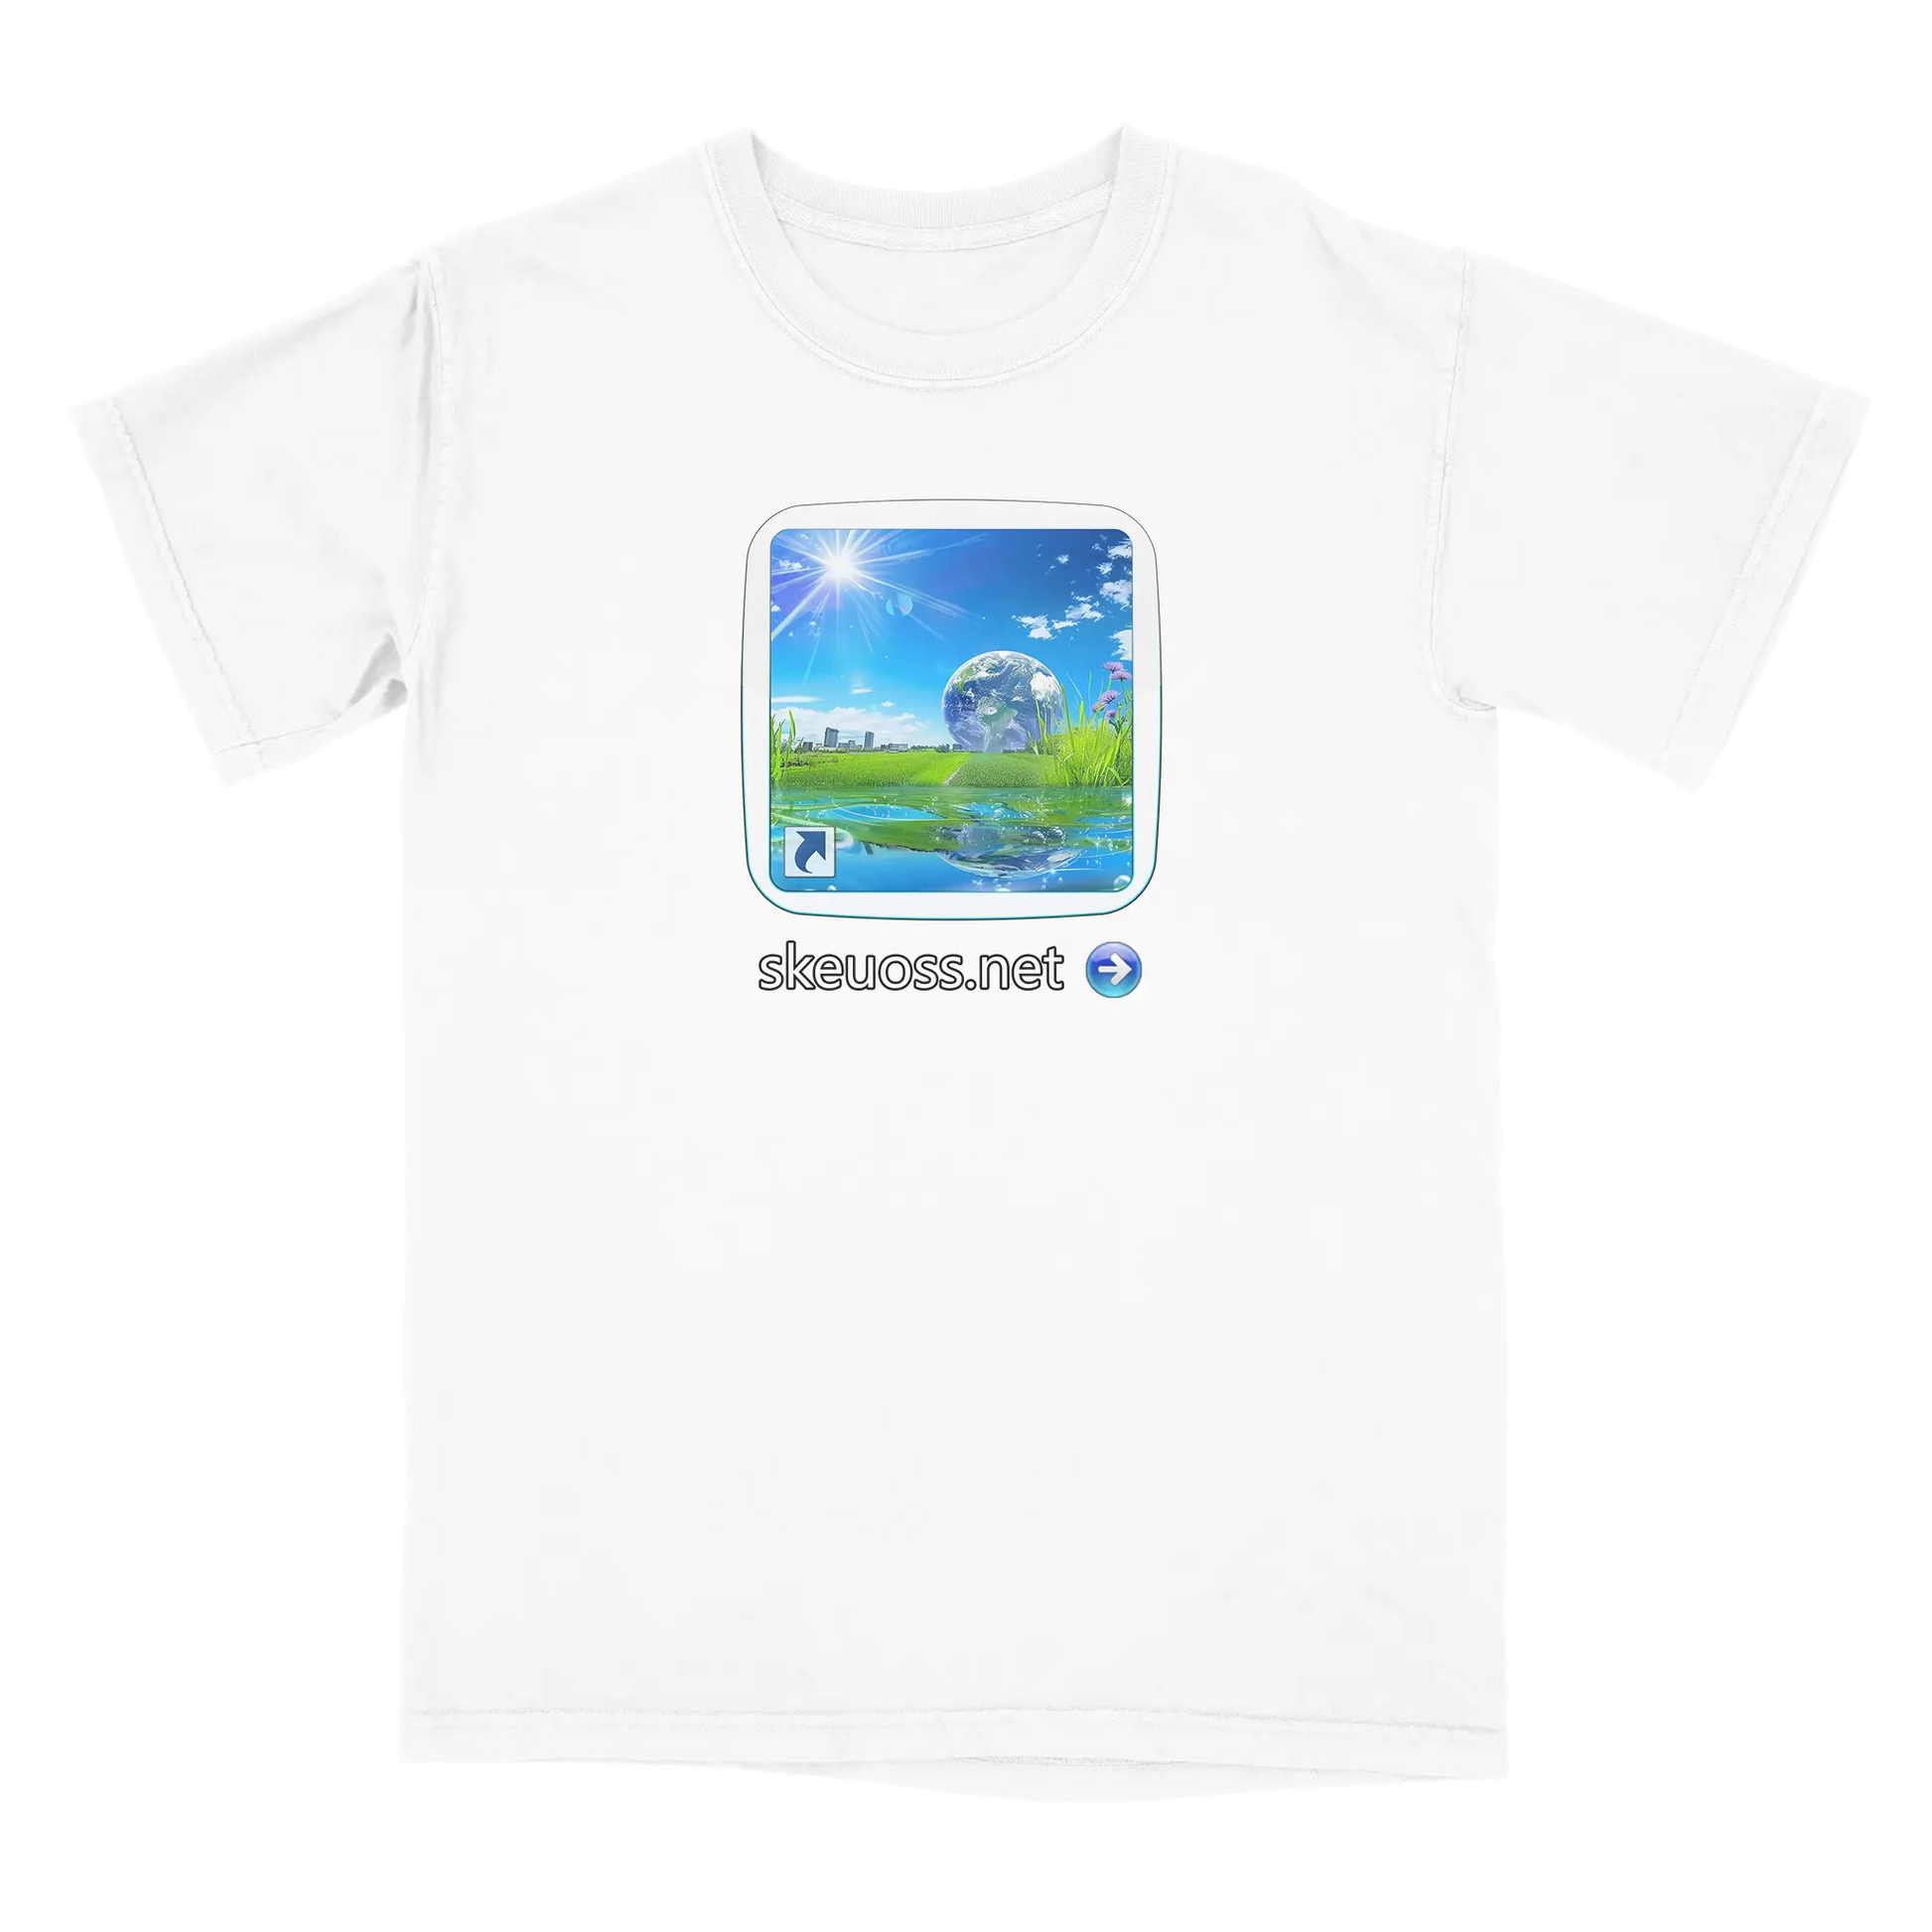 Frutiger Aero T-shirt - User Login Collection - User 341